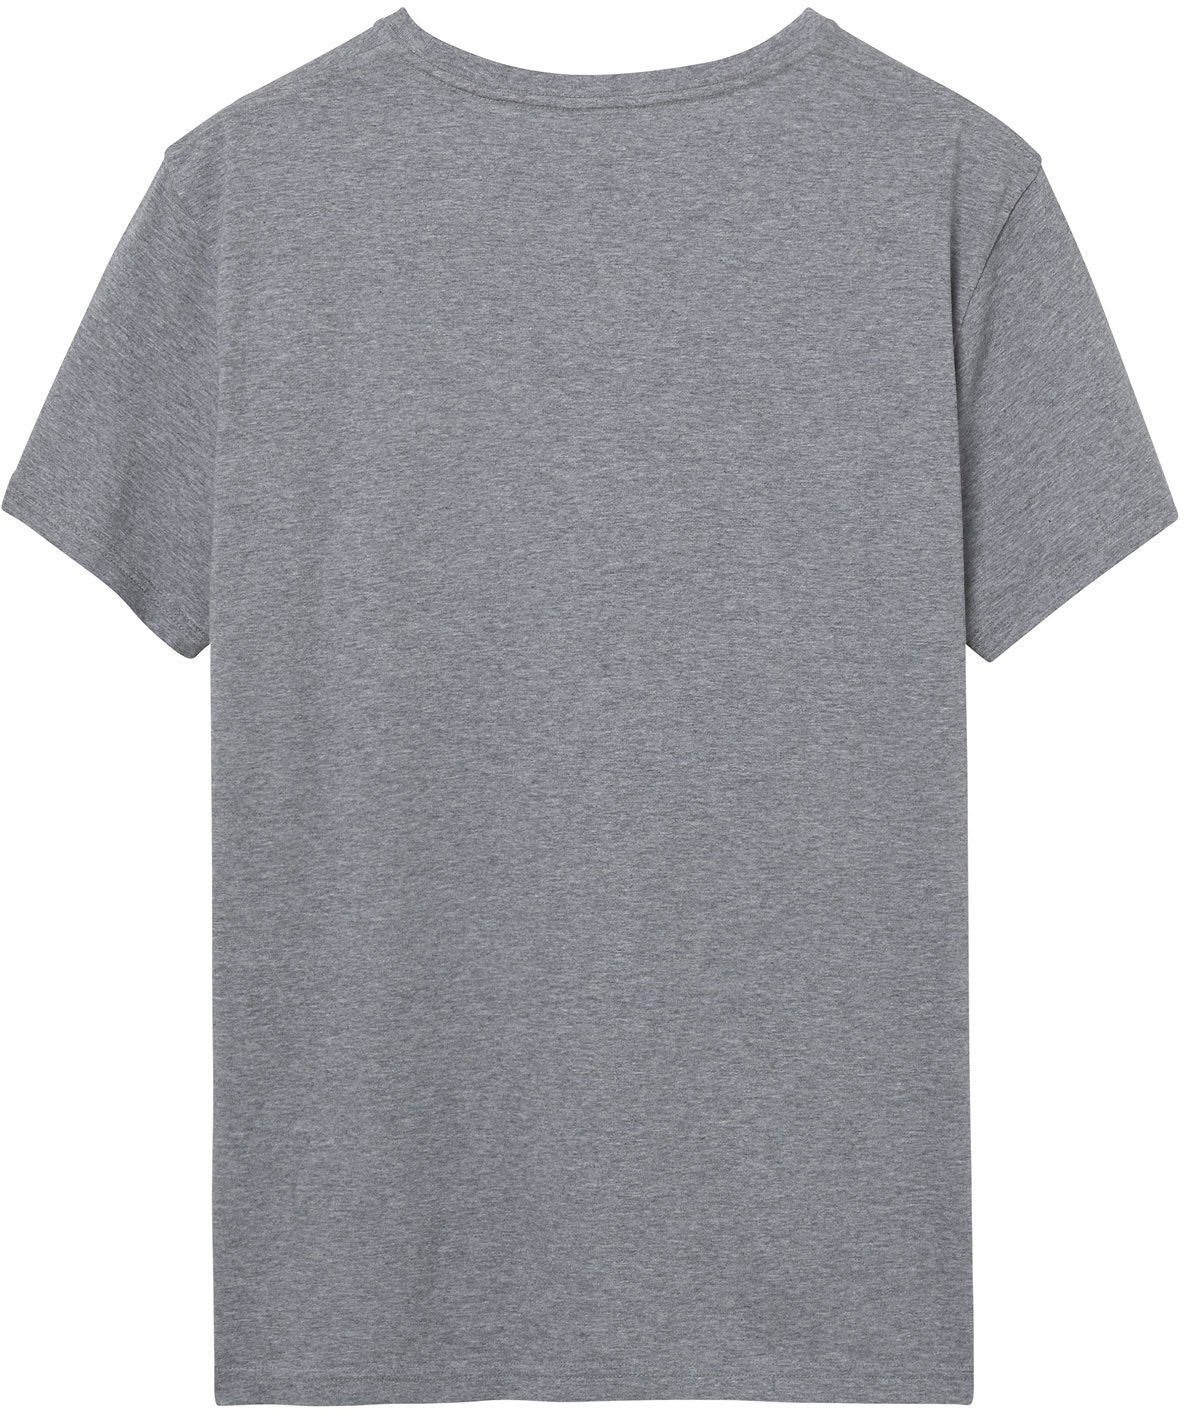 Markendruck SHIELD Großer grey T-Shirt melange Gant